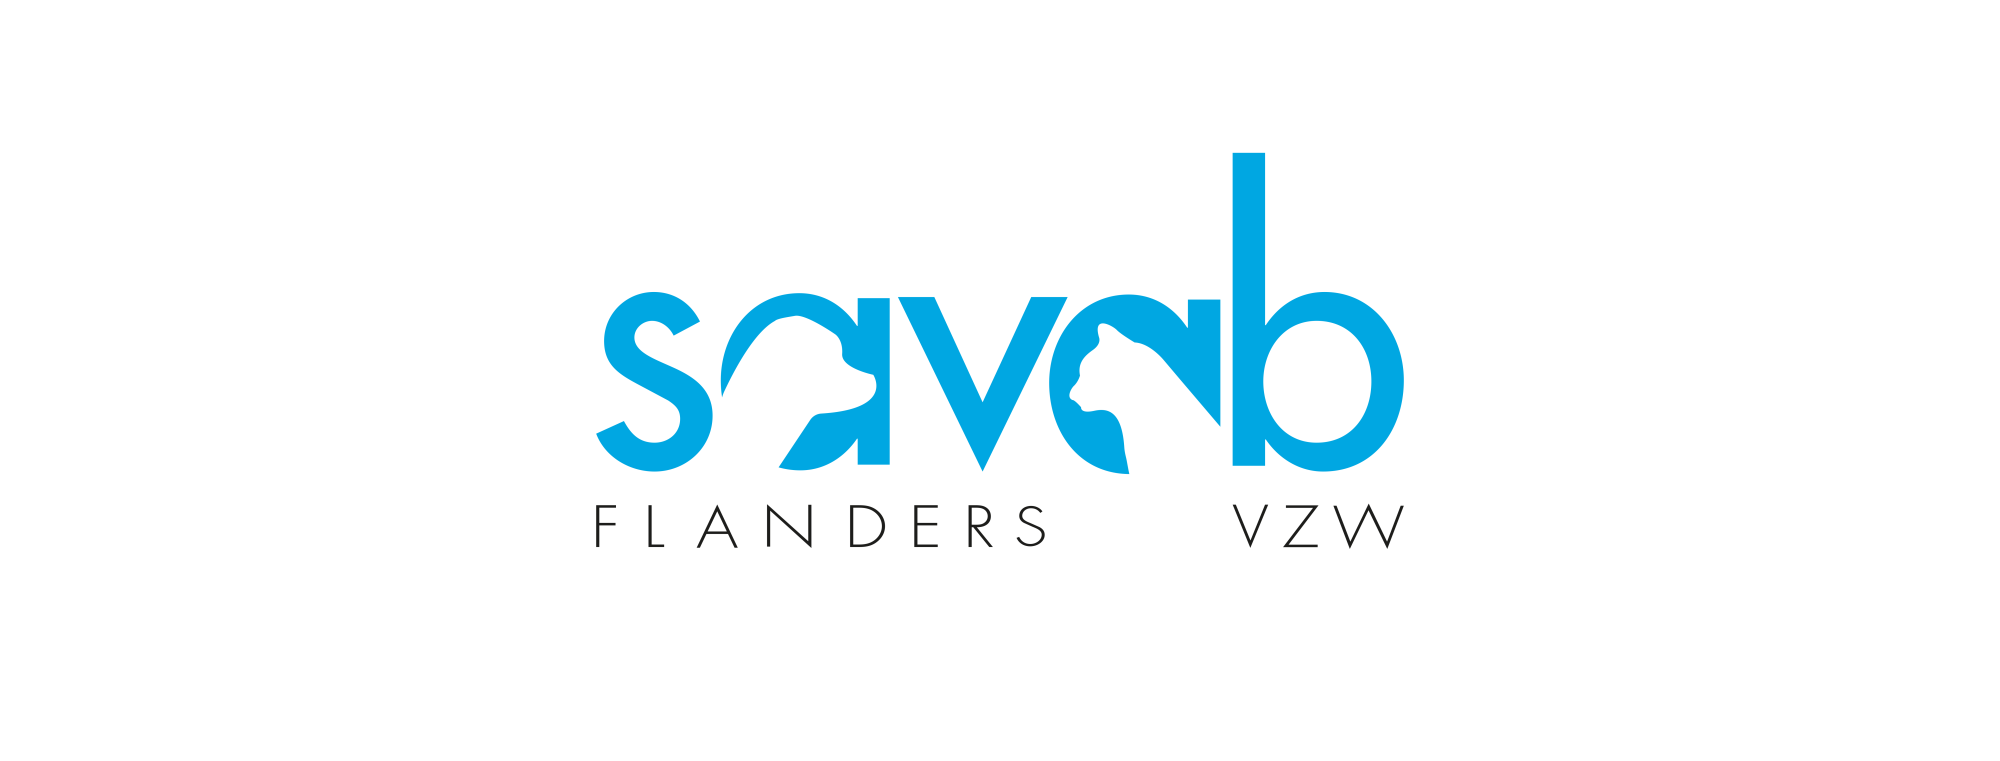 Savab-Flanders vzw logo